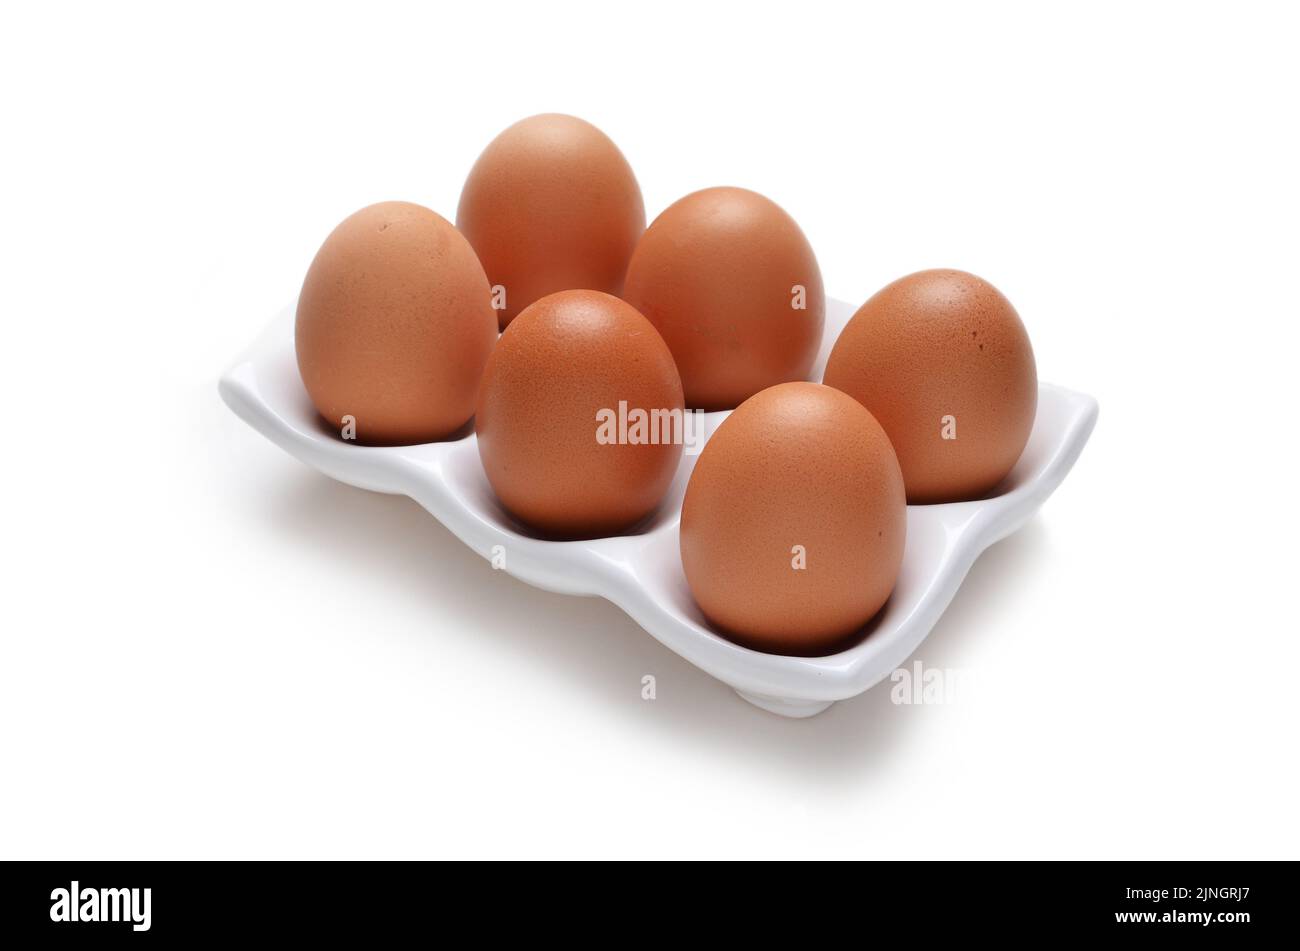 Half a dozen or 6 eggs in white ceramic tray holder isolated on white Stock Photo